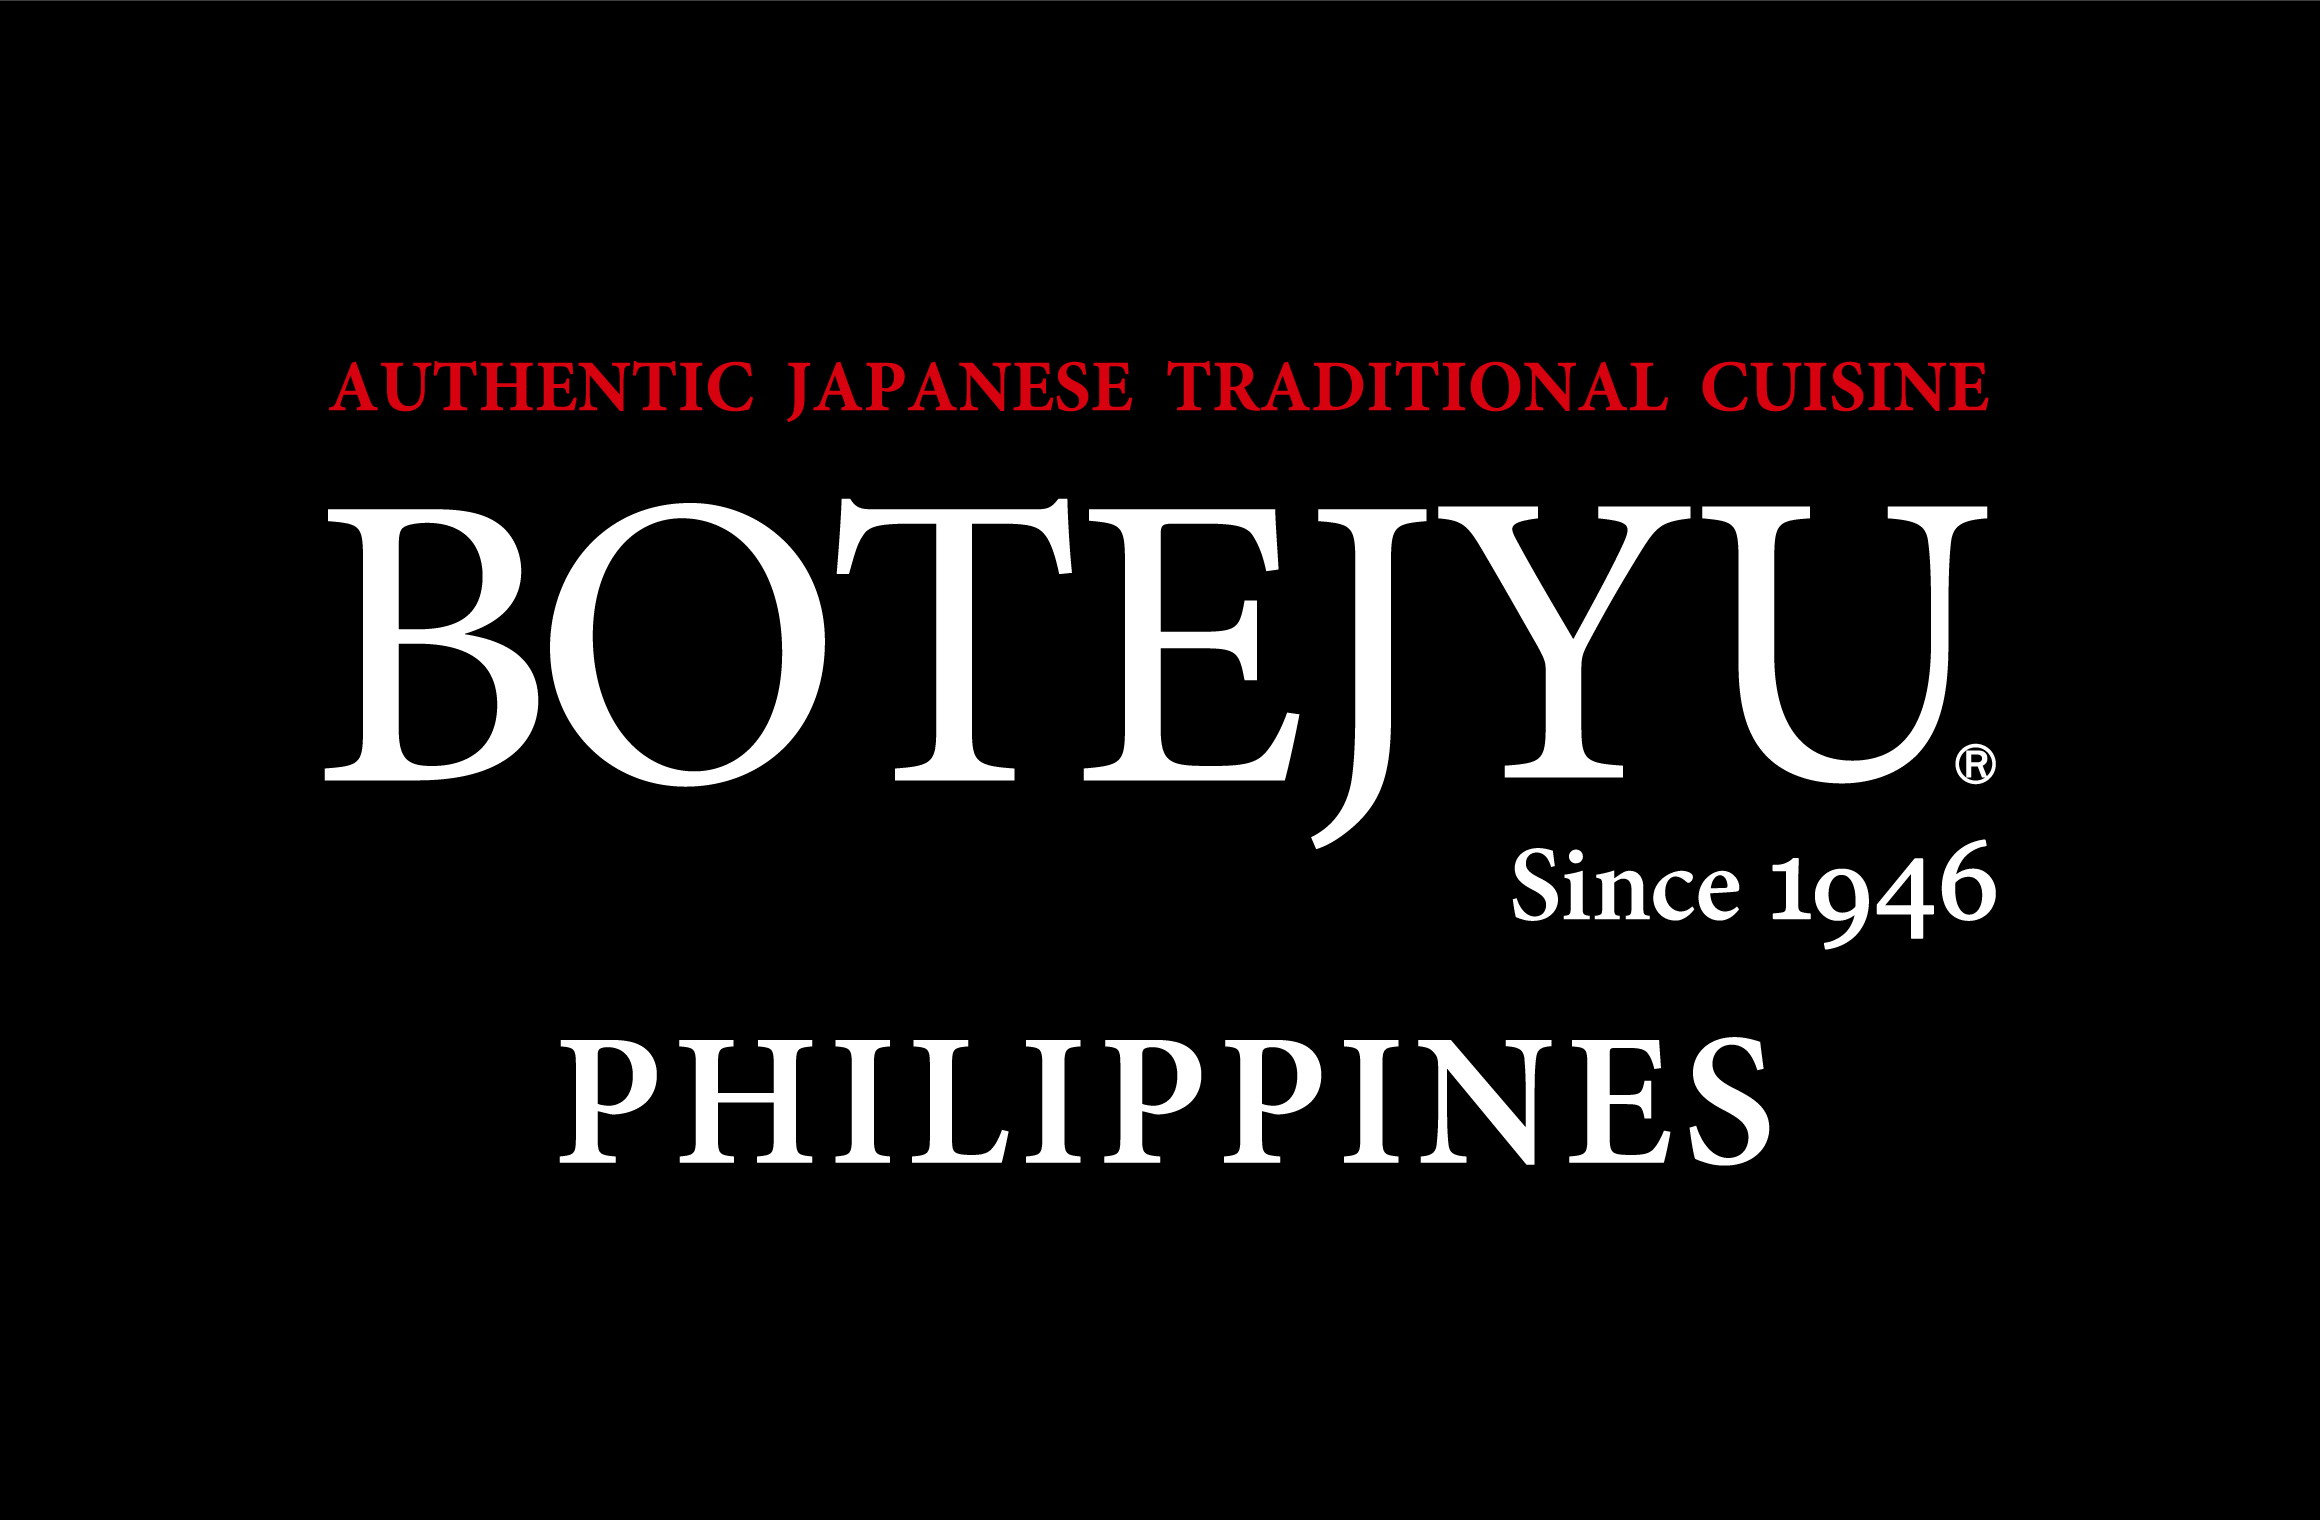 「BOTEJYU® Philippines 57 / SM City San Pablo」: オープン致します。